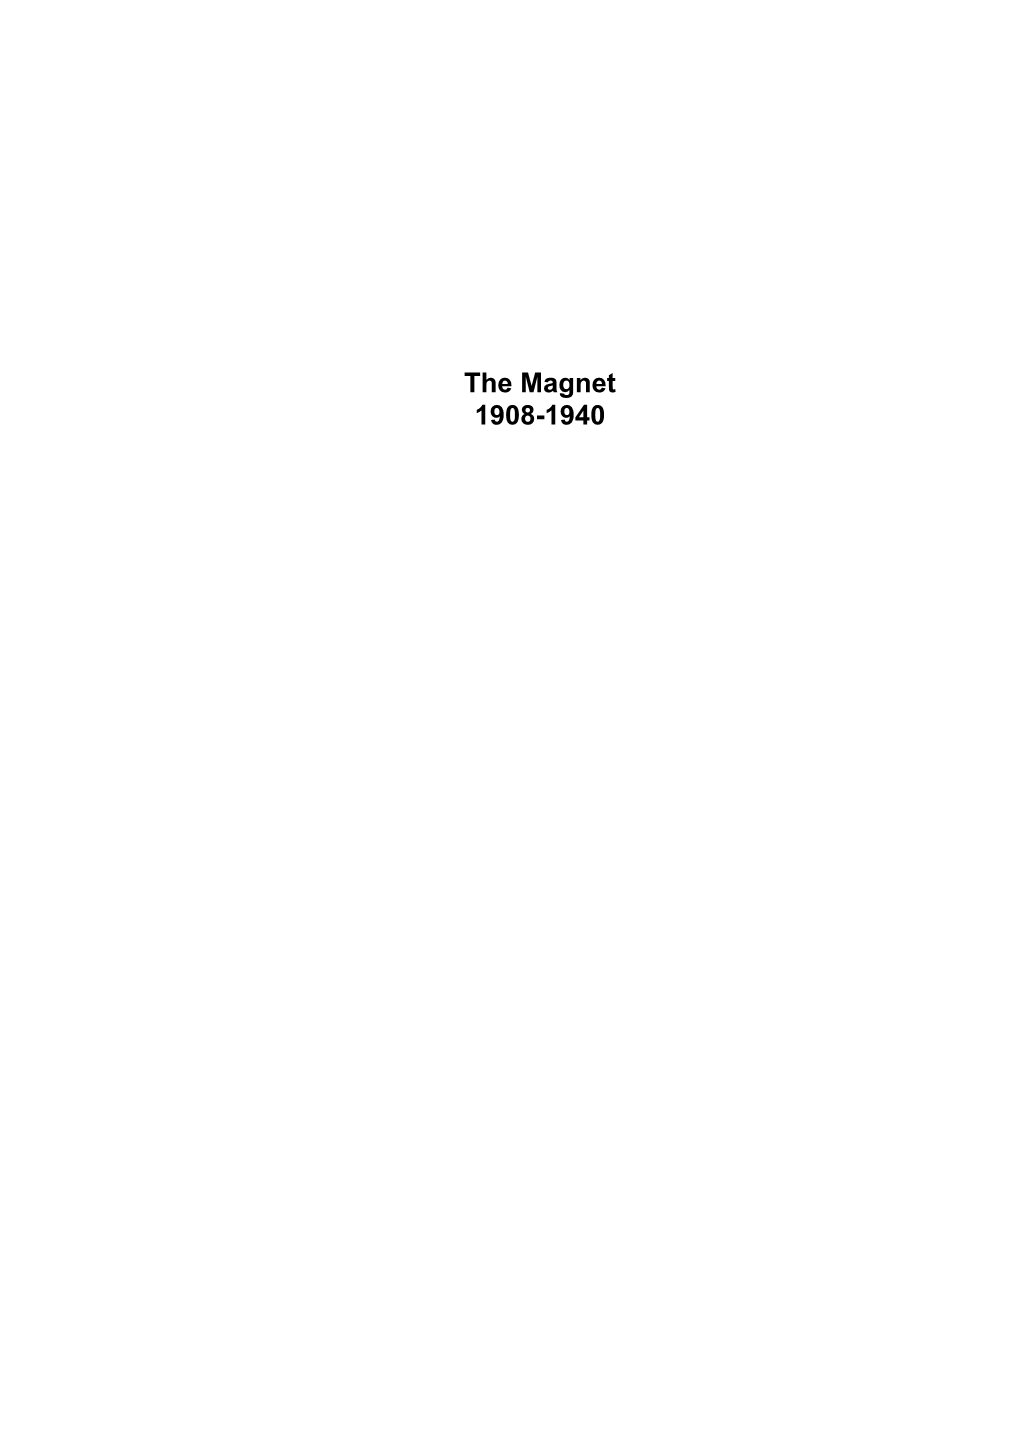 The Magnet Index 2 - 1908